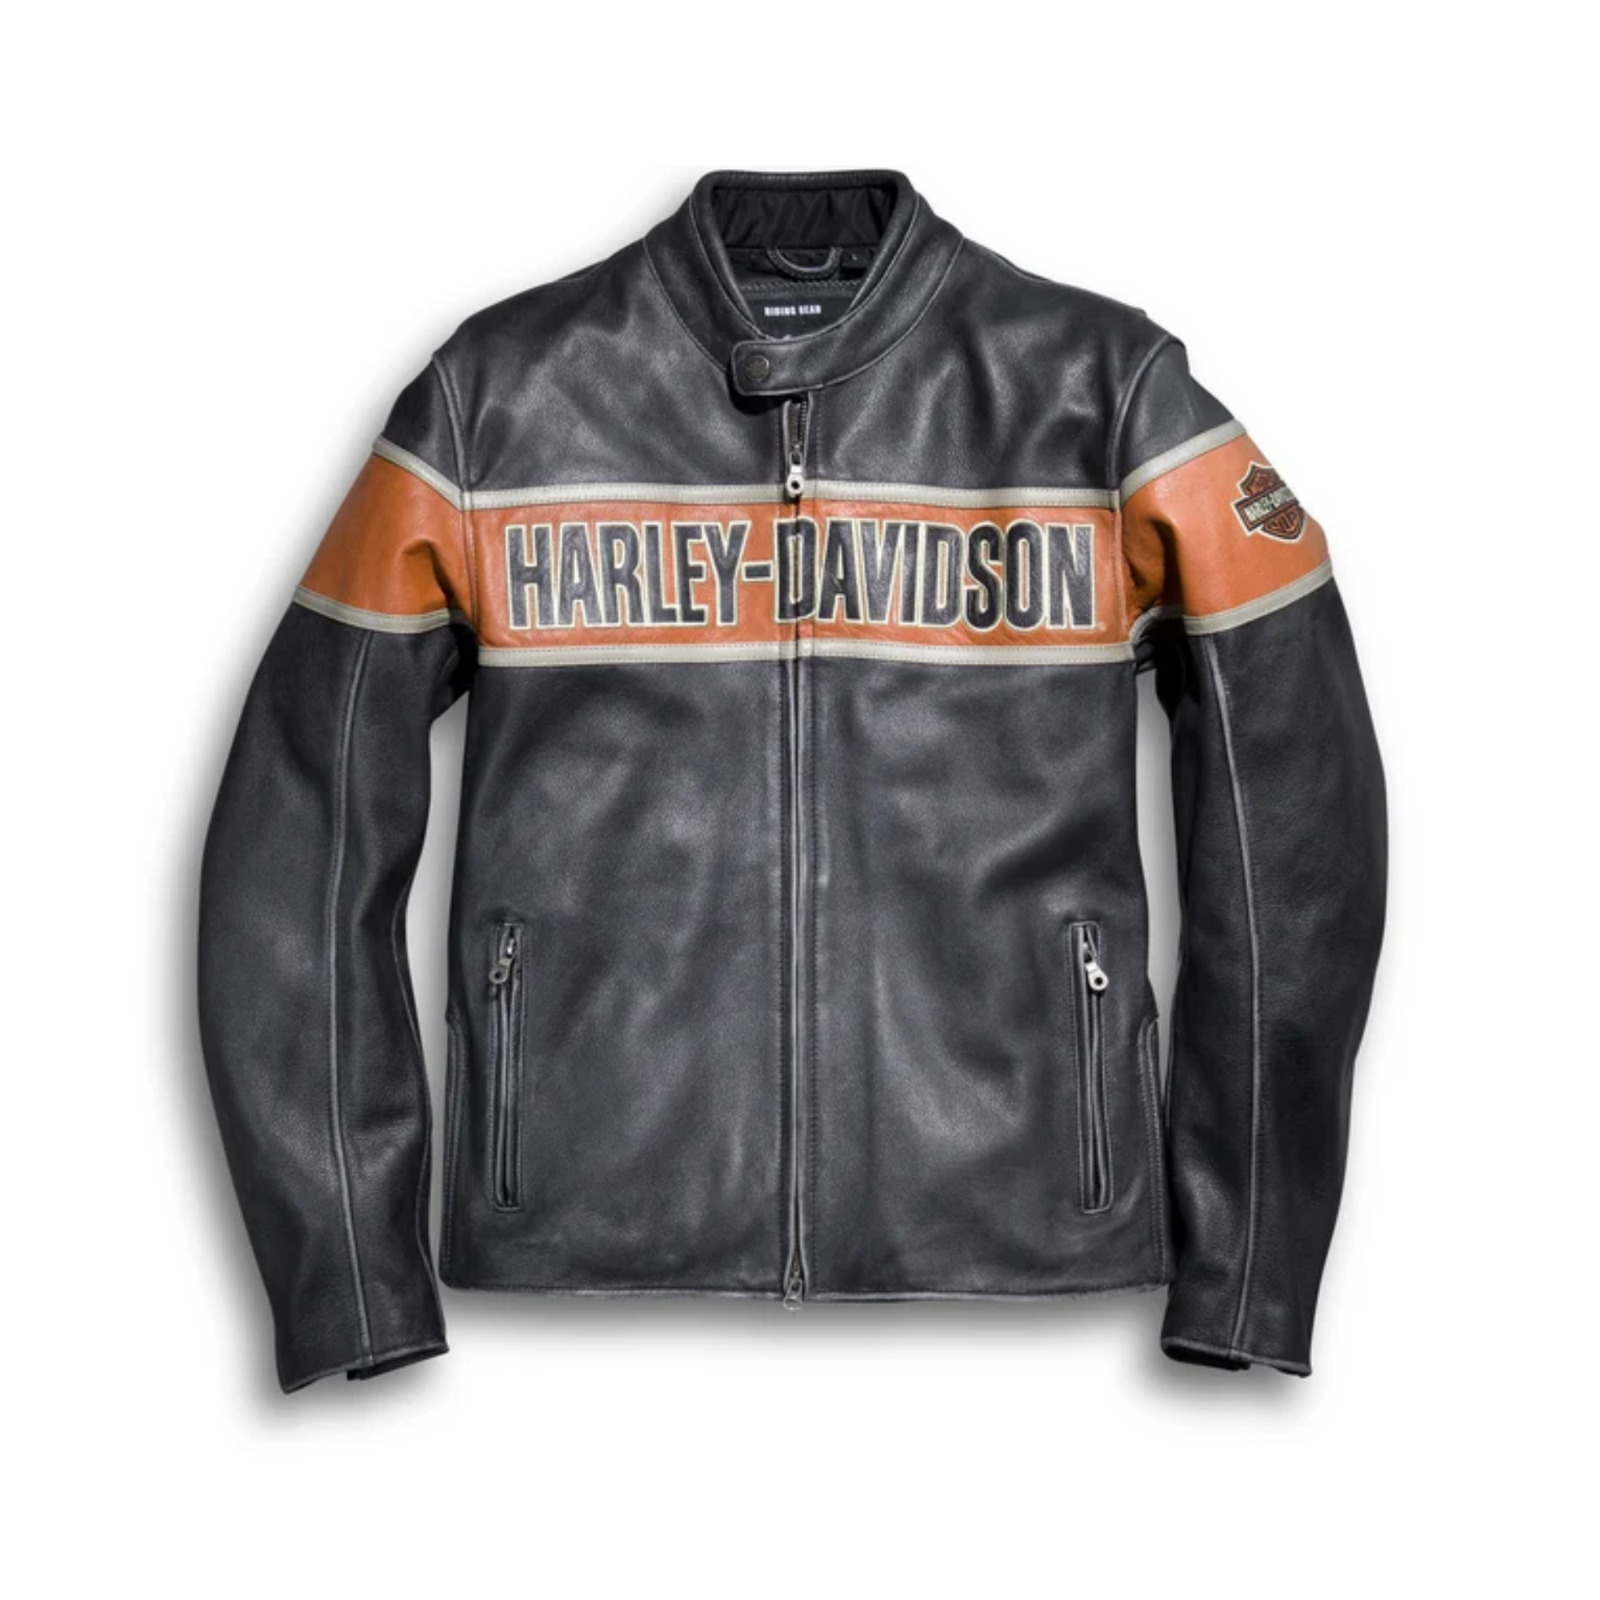 Men's Harley Biker Jacket – Victoria Lane Black Motorcycle Style - Ideal Gift